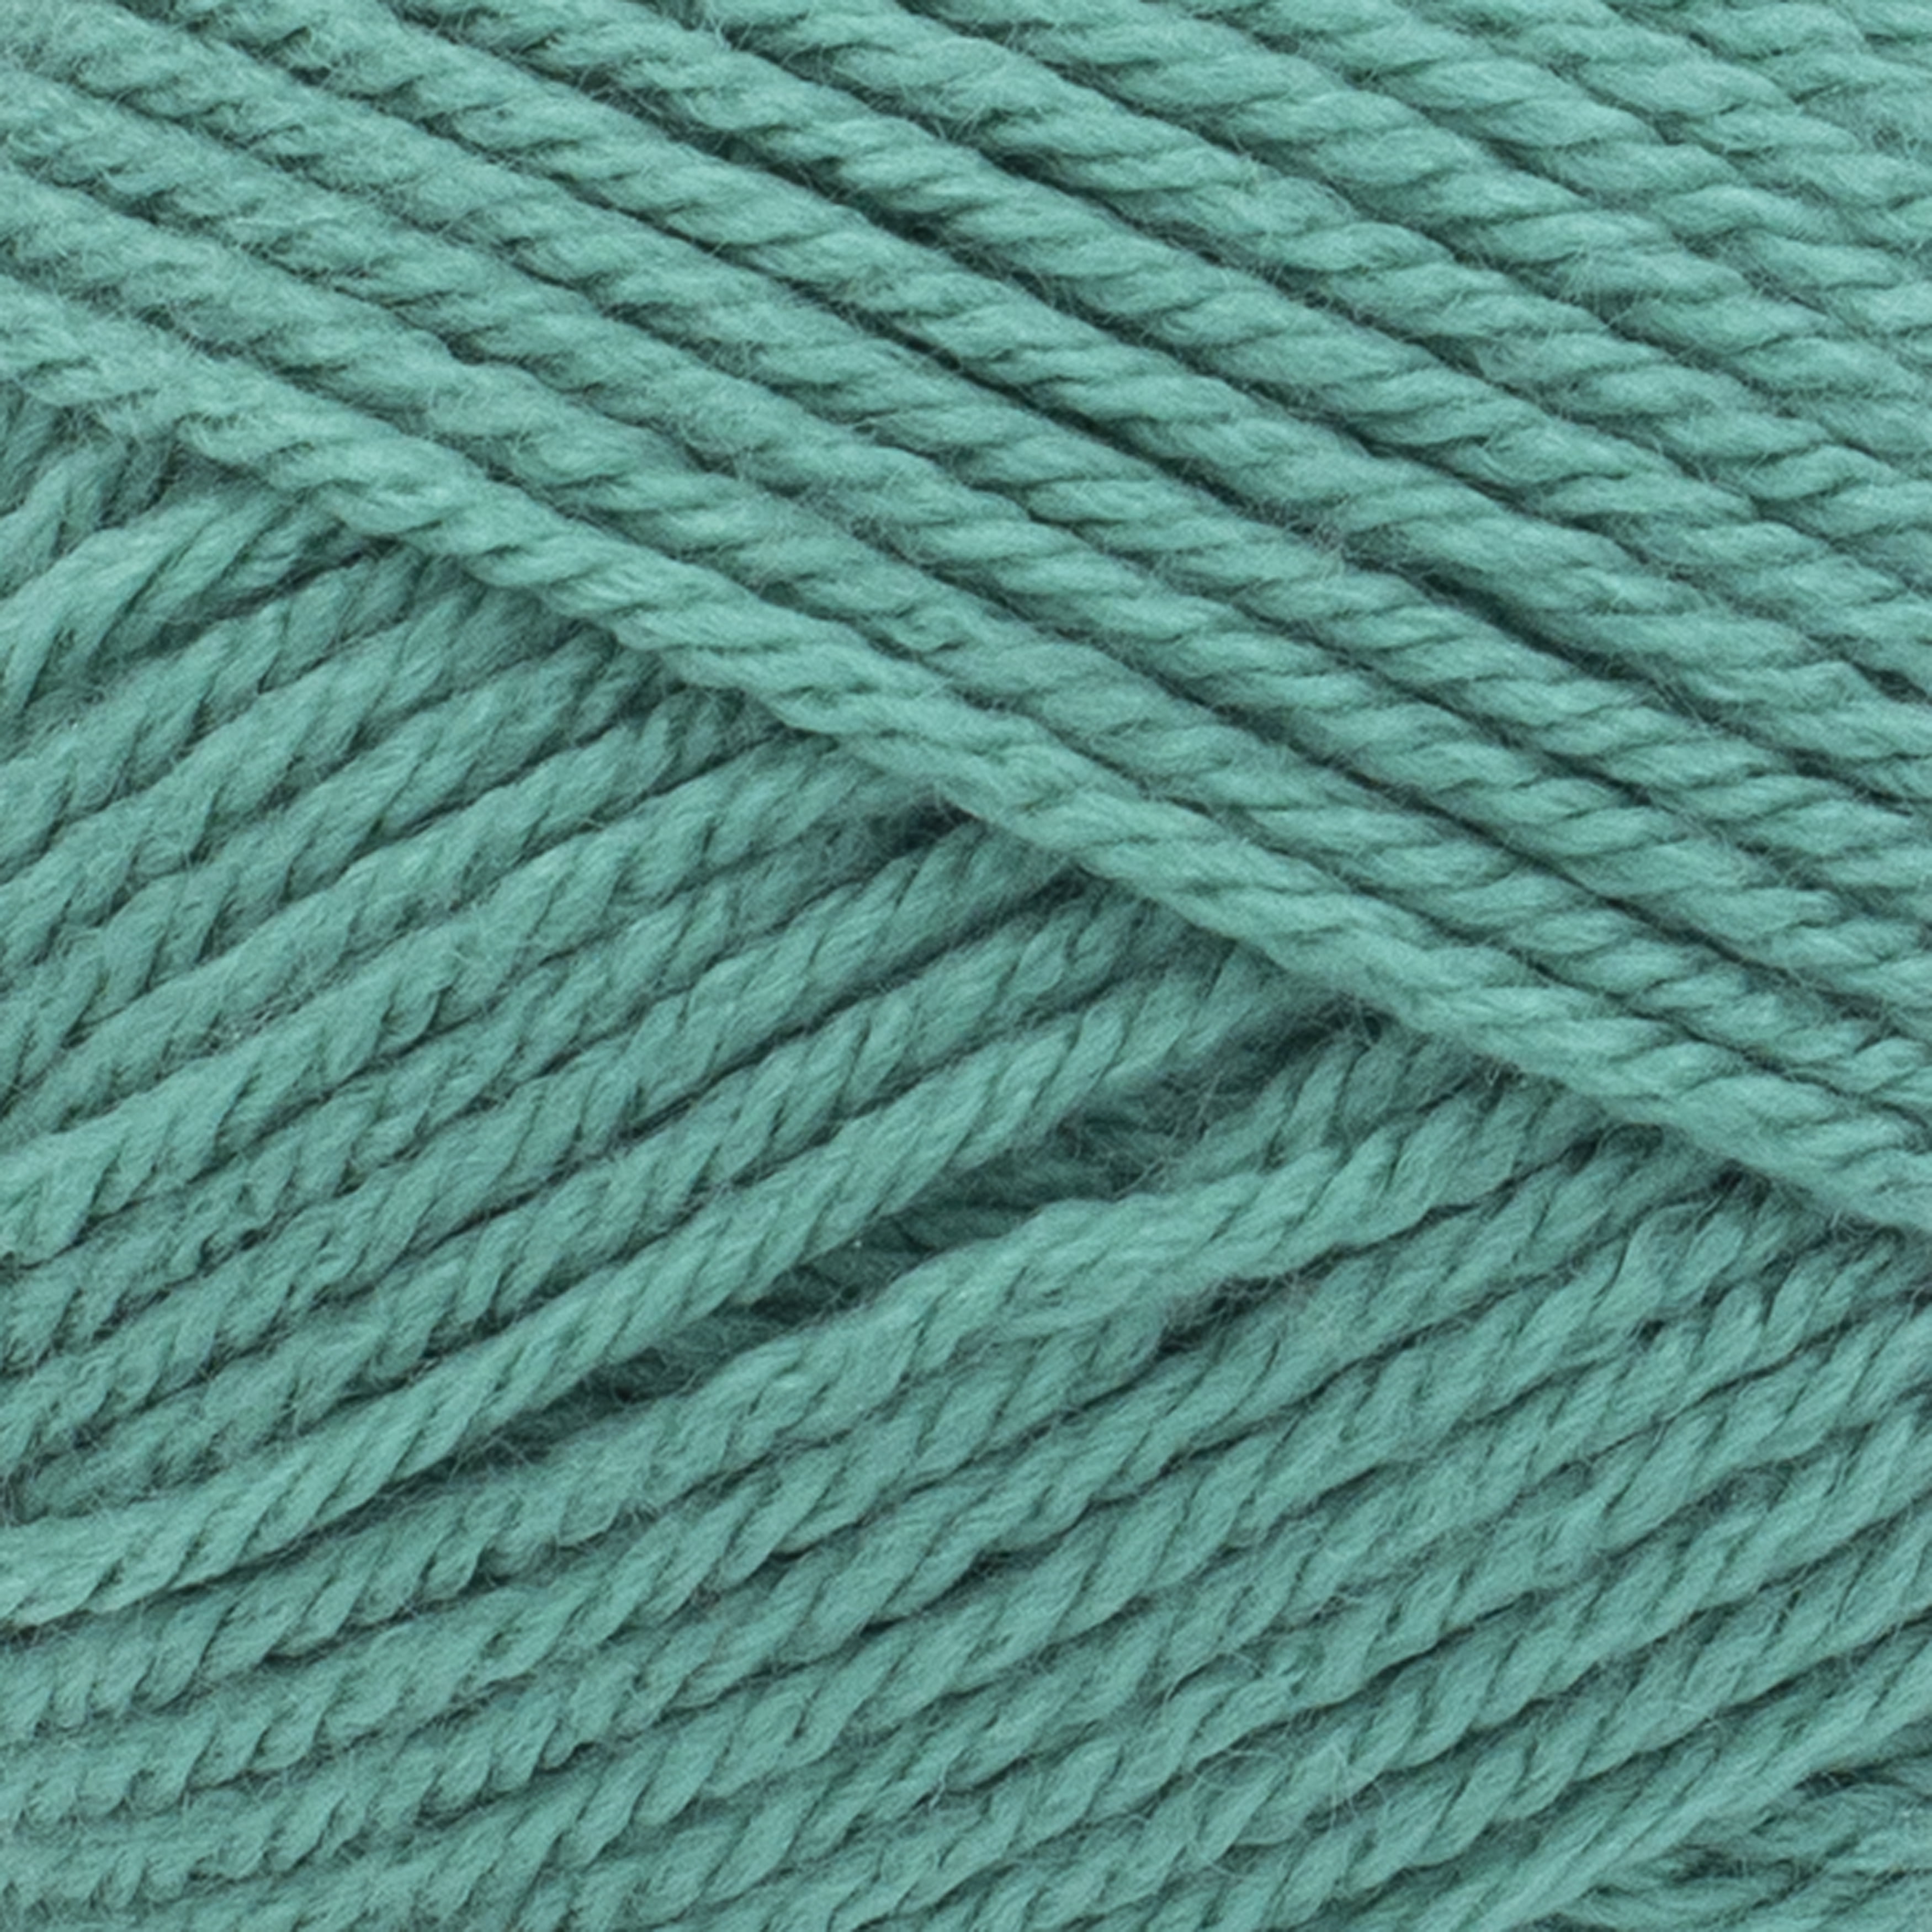 Lion Brand Yarn Basic Stitch Anti-pilling Knitting Yarn, Yarn for Crocheting, 3-Pack, Almond Tweed